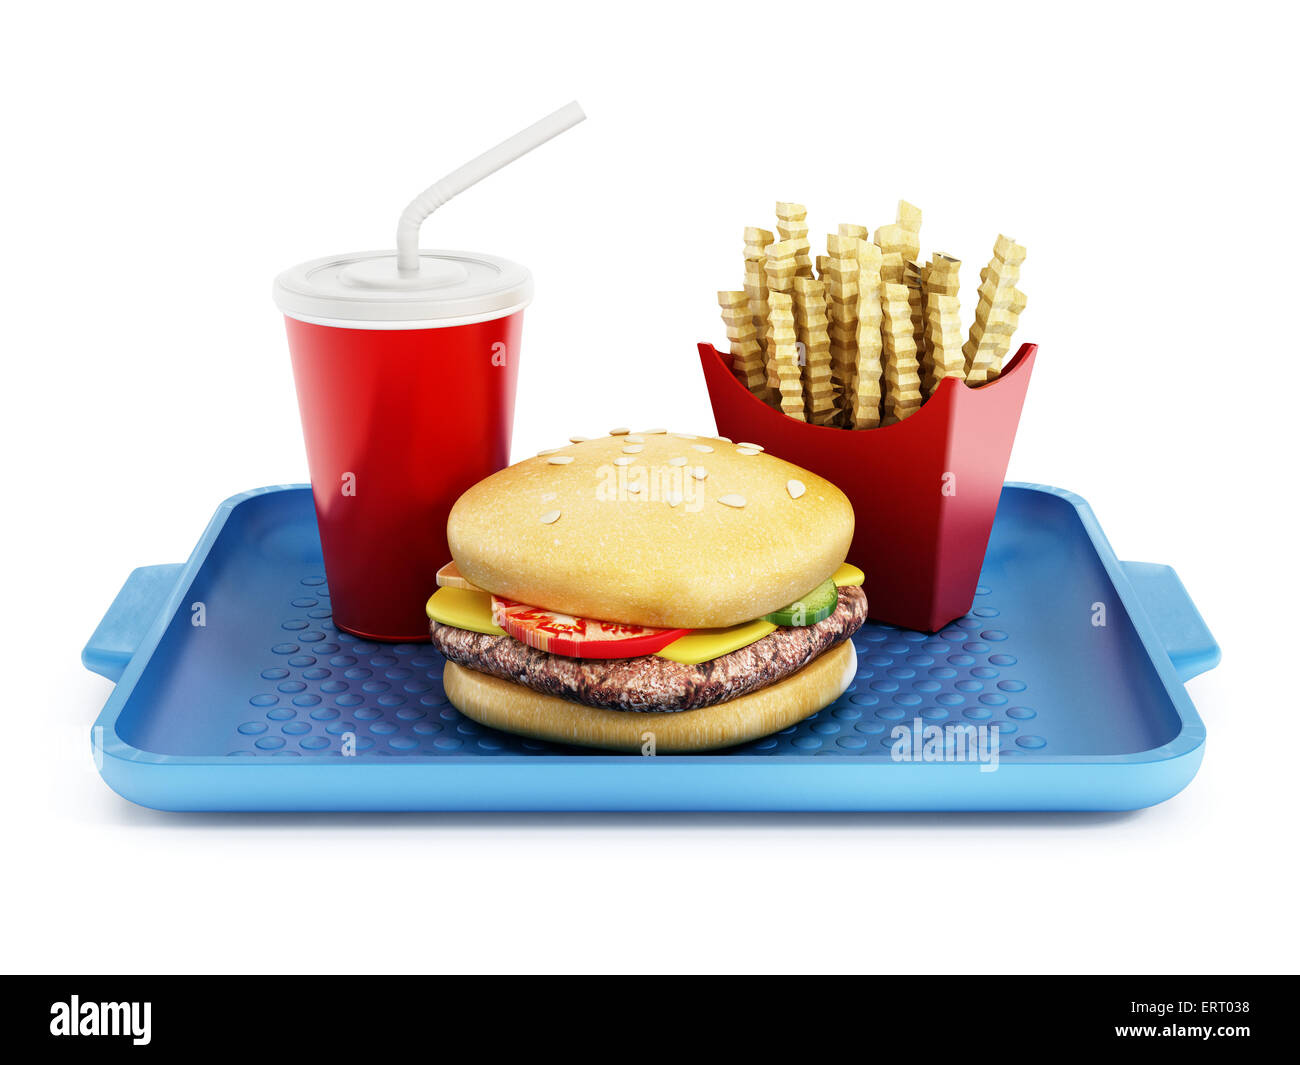 Hamburger Soda And French Fries On Fast Food Tray Stock Photo Alamy